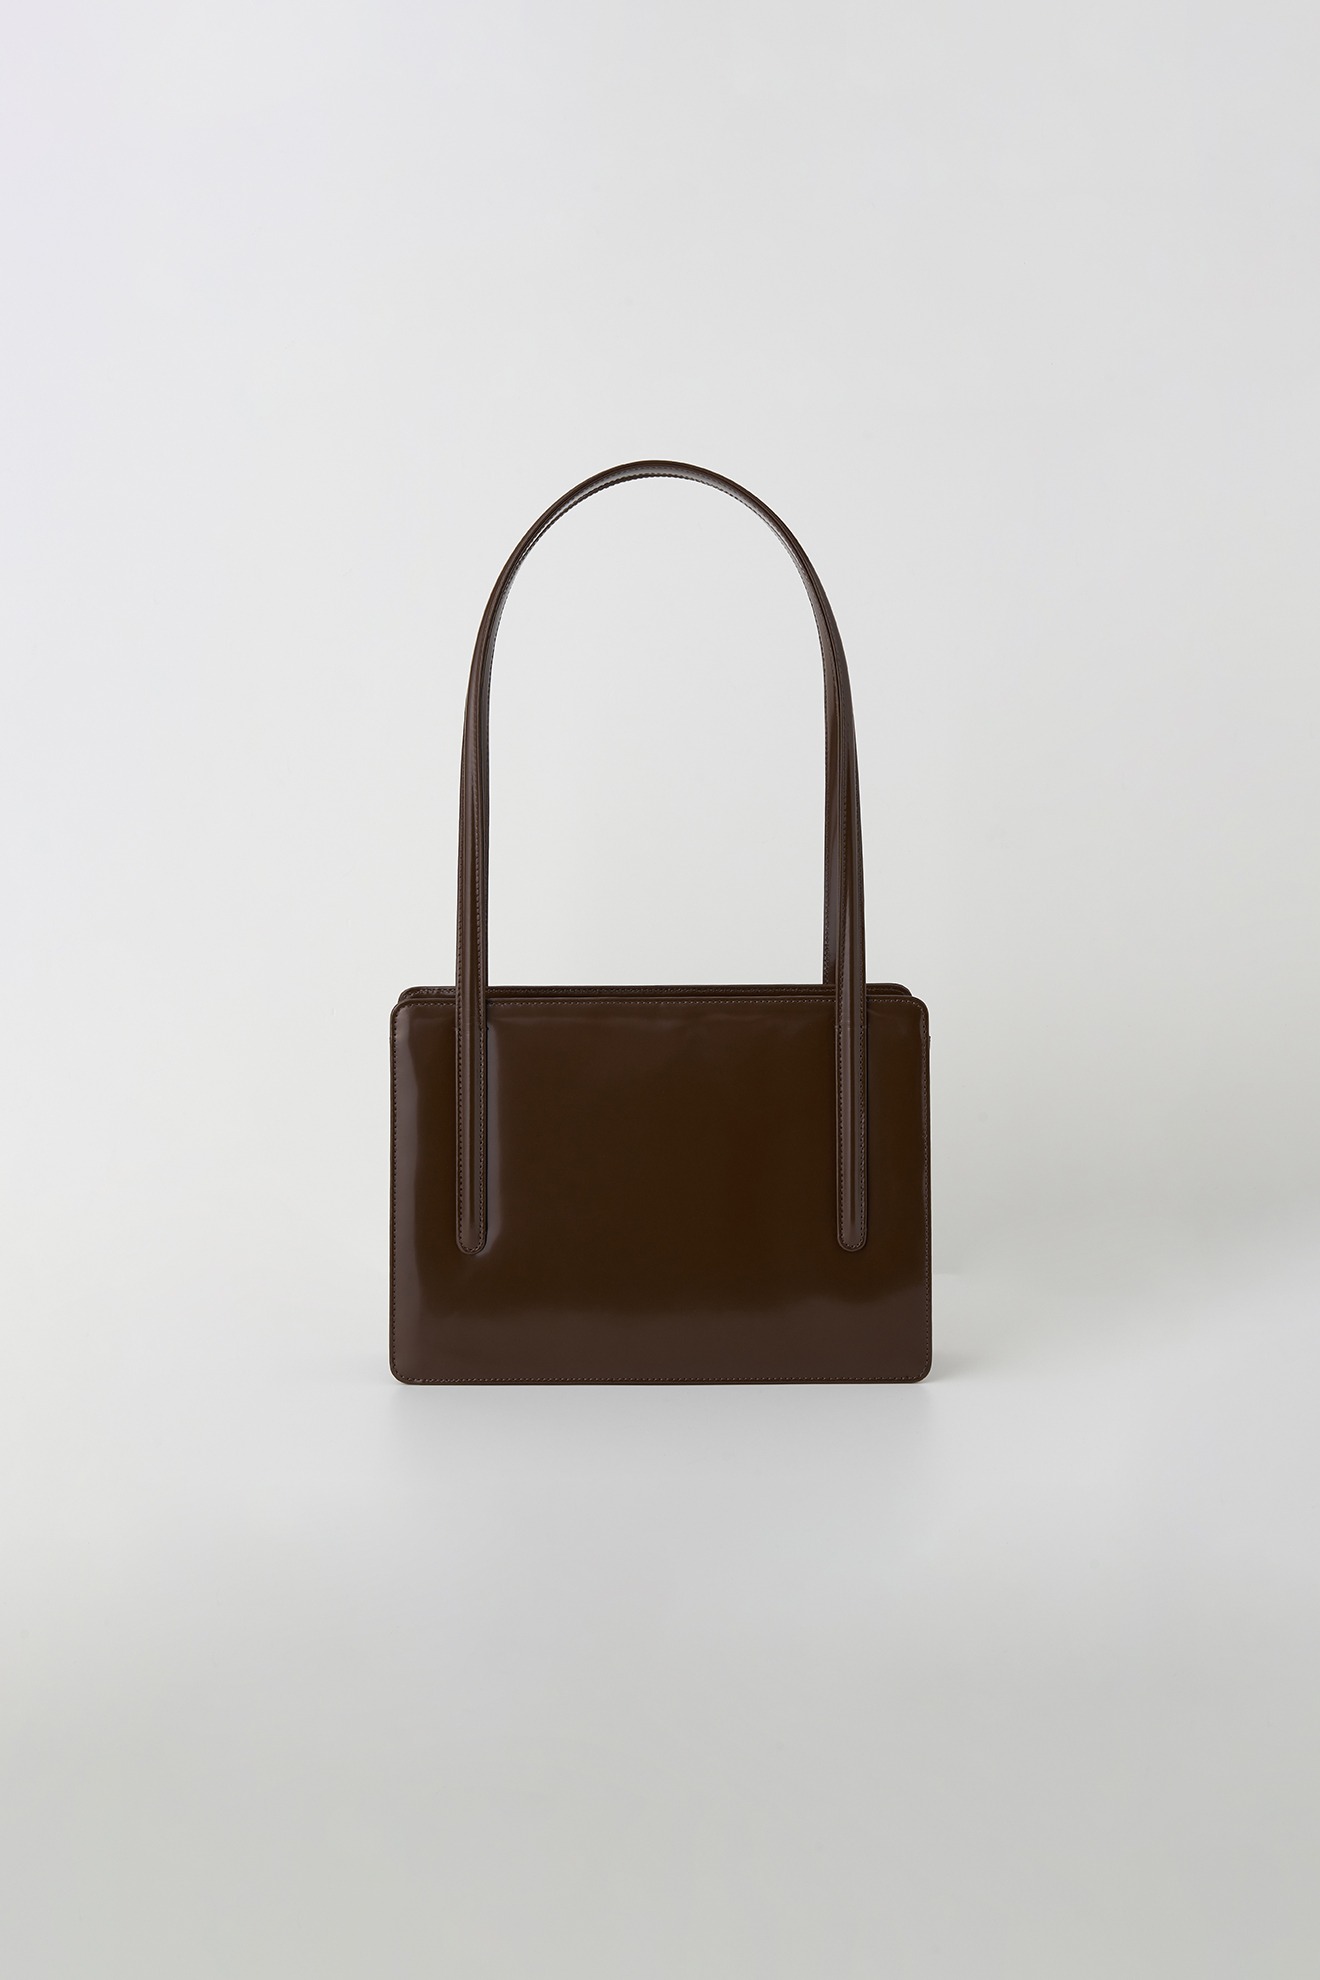 Vox Square Bag (brown)